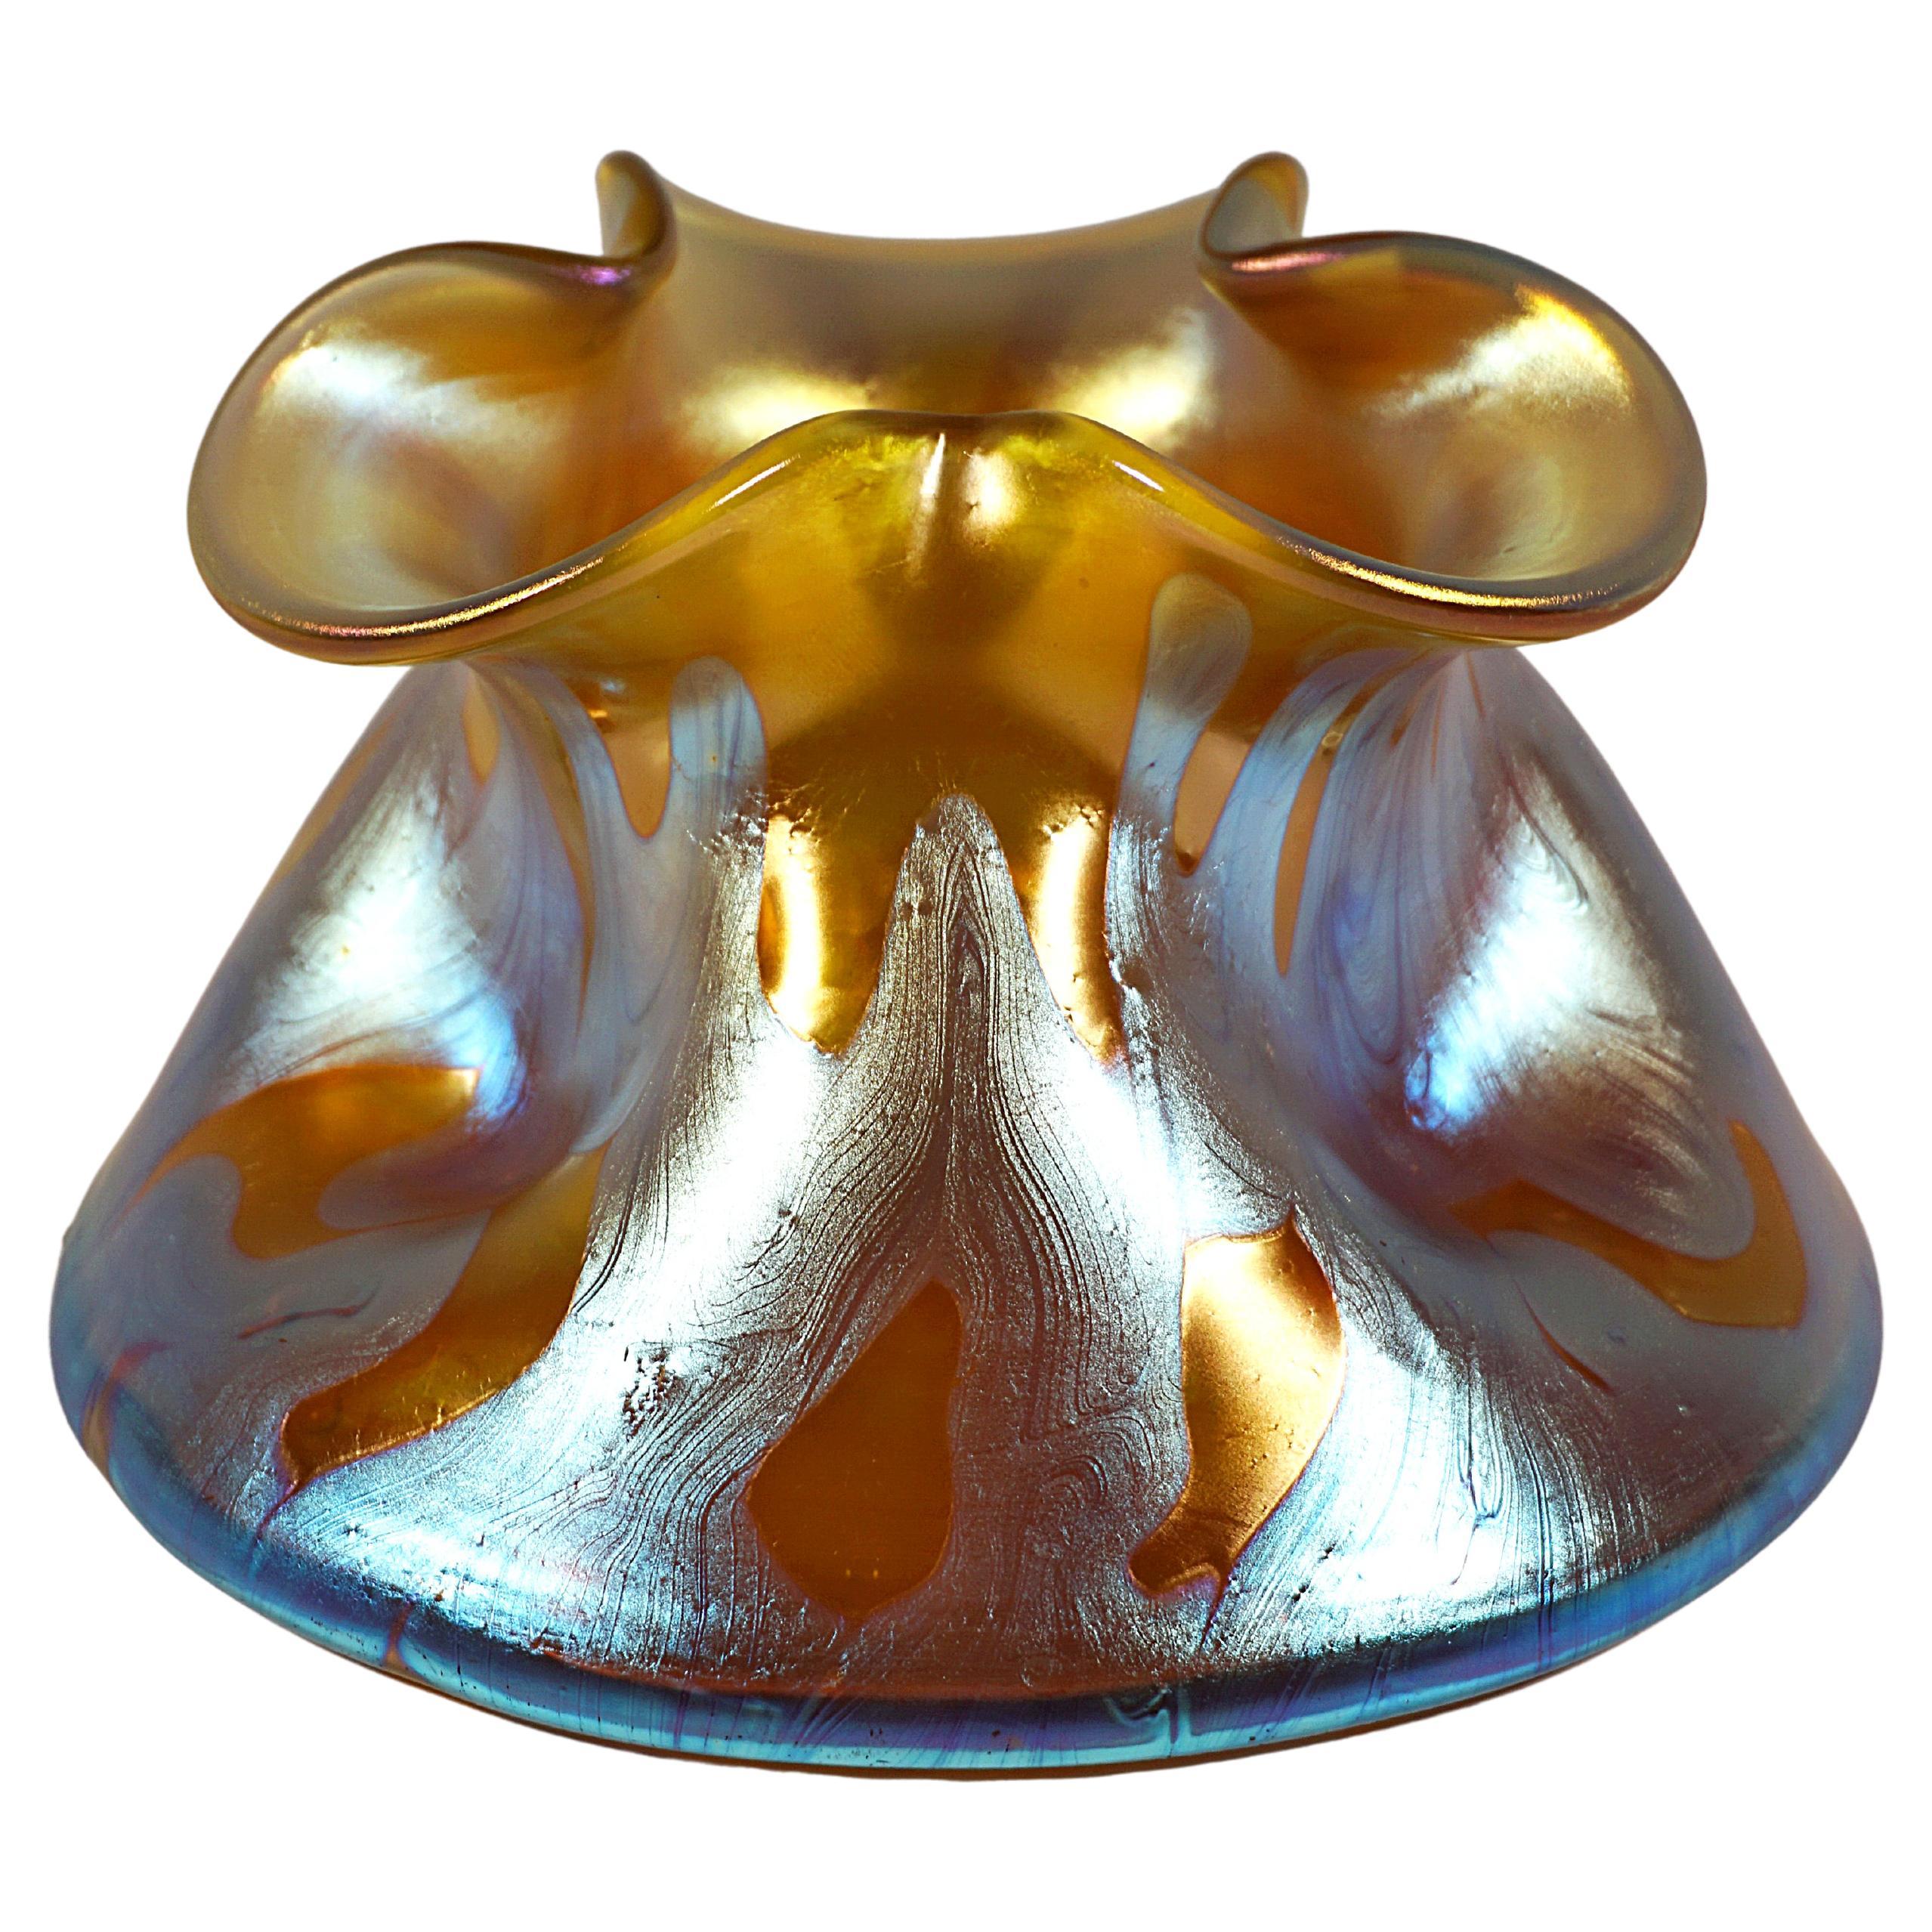 Loetz Art Nouveau Glass Vase Bronze Phenomenon Genre 29, Austria-Hungary, C 1900